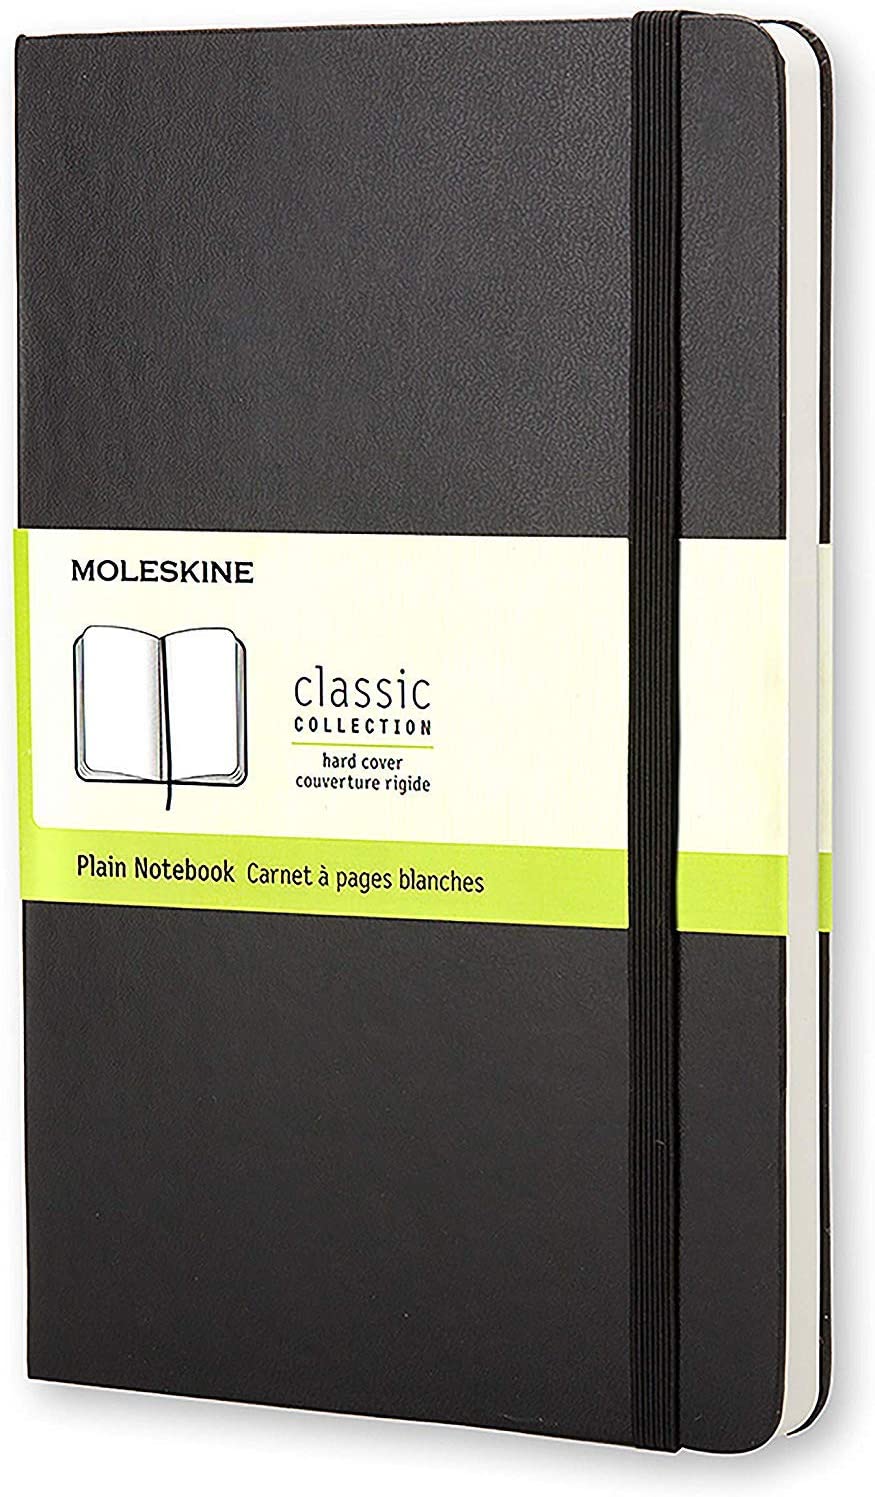 Moleskine Papir Pocket / Black / Hardcover Moleskine Classic notesbog - Plain